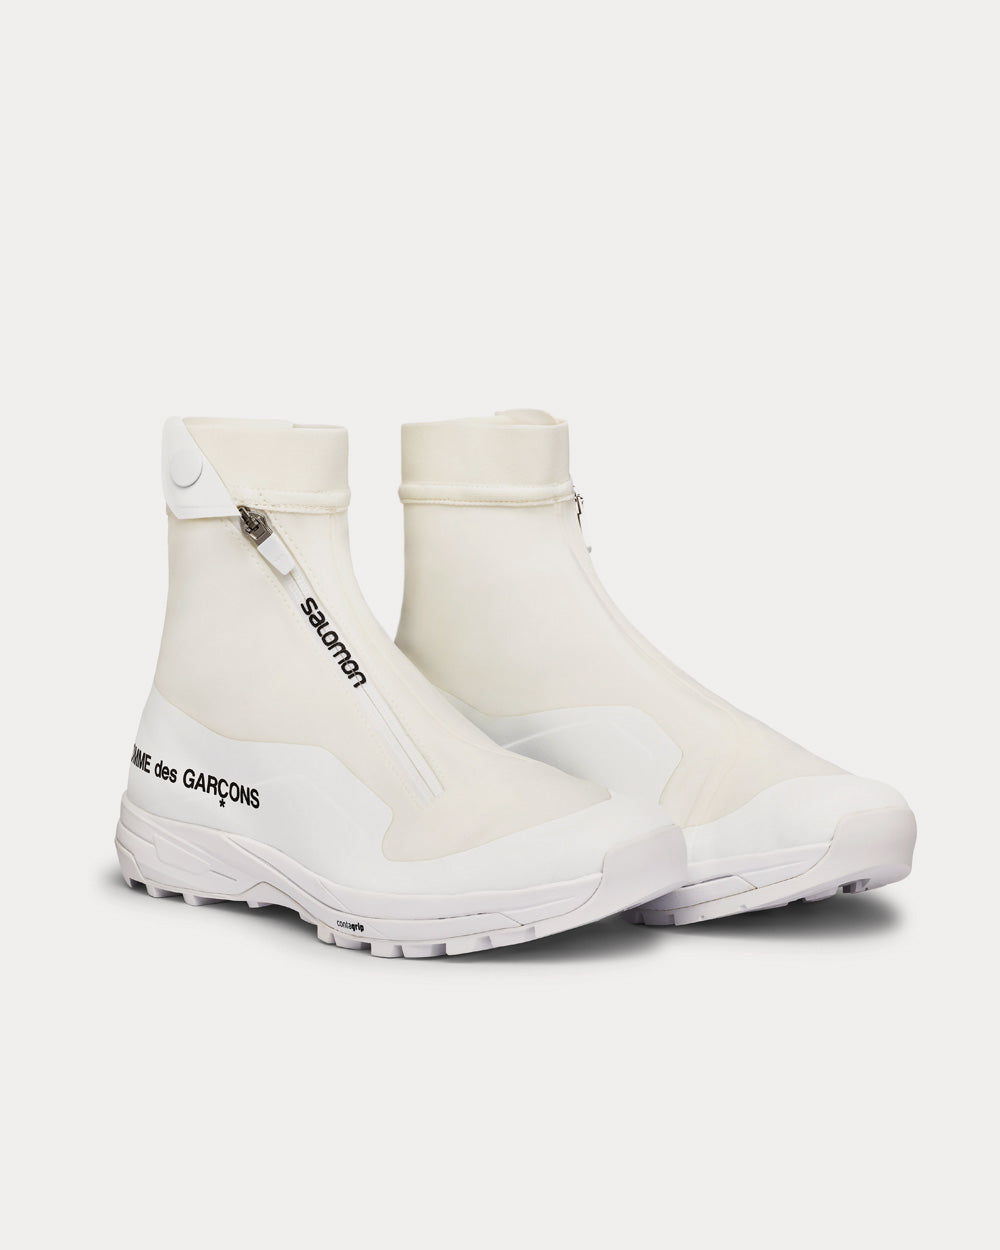 Salomon x Comme des Garçons - XA-Alpine 2 White High Top Sneakers